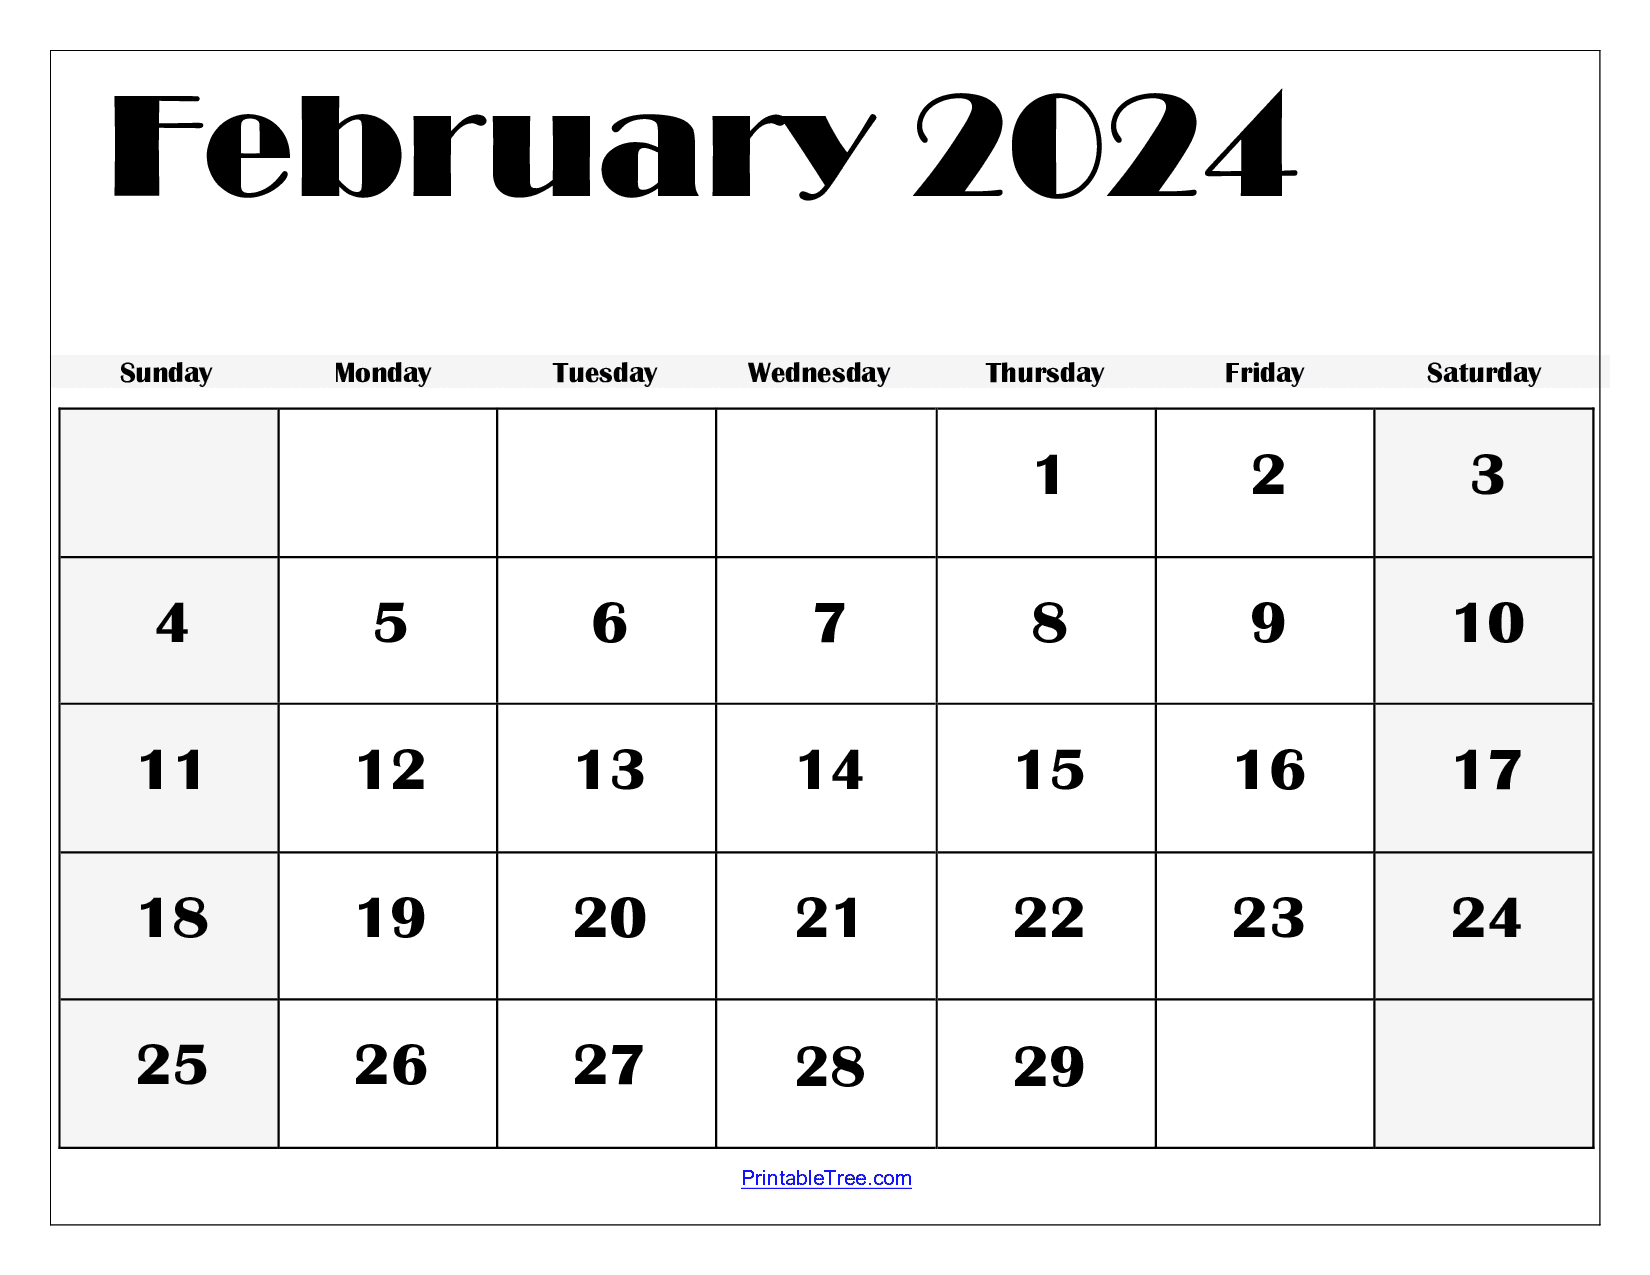 February 2024 Calendar Printable Pdf Template With Holidays for Free Printable February 2024 Calendar Page